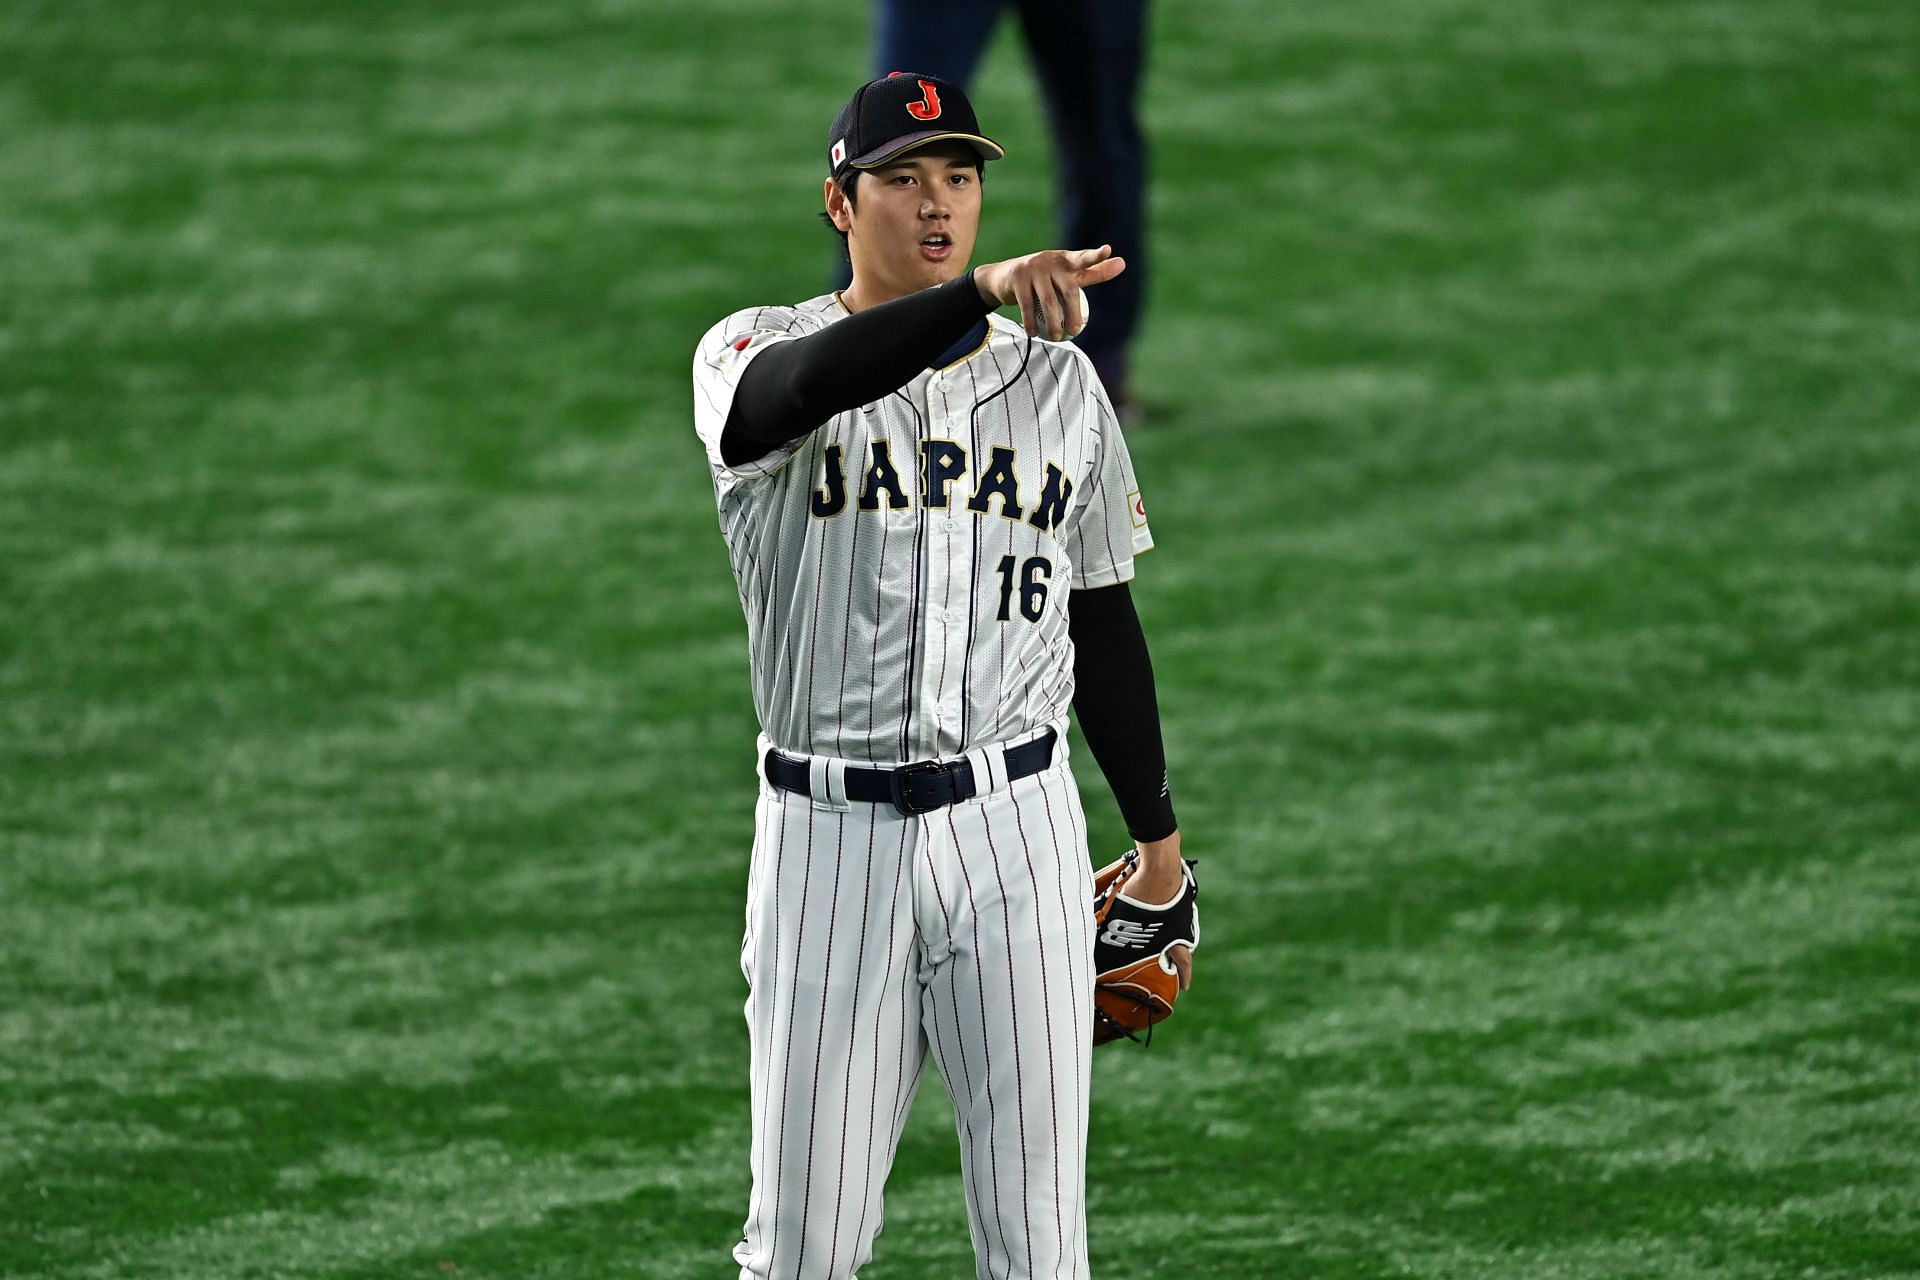 MLBPA on X: Shohei Ohtani, WBC MVP. Thank you, Shohei, for